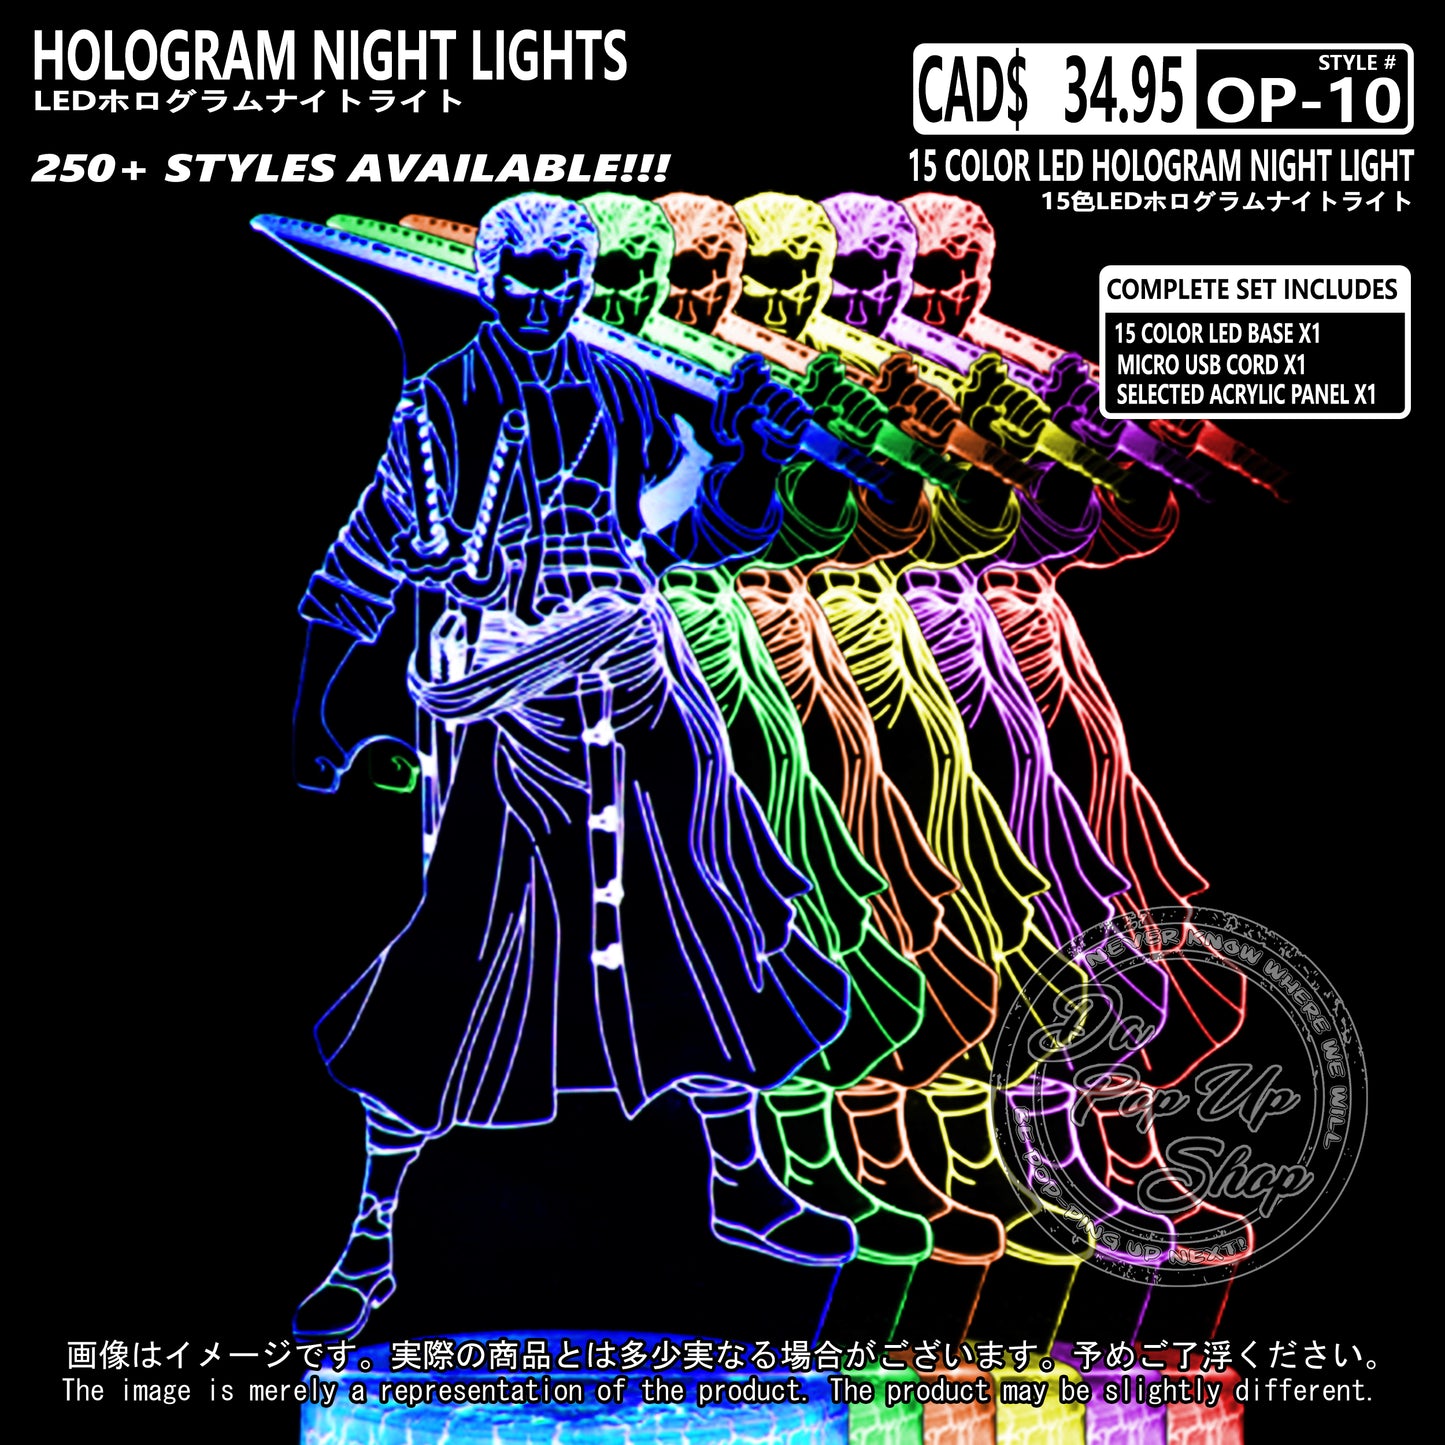 (OP-10) One Piece Hologram LED Night Light